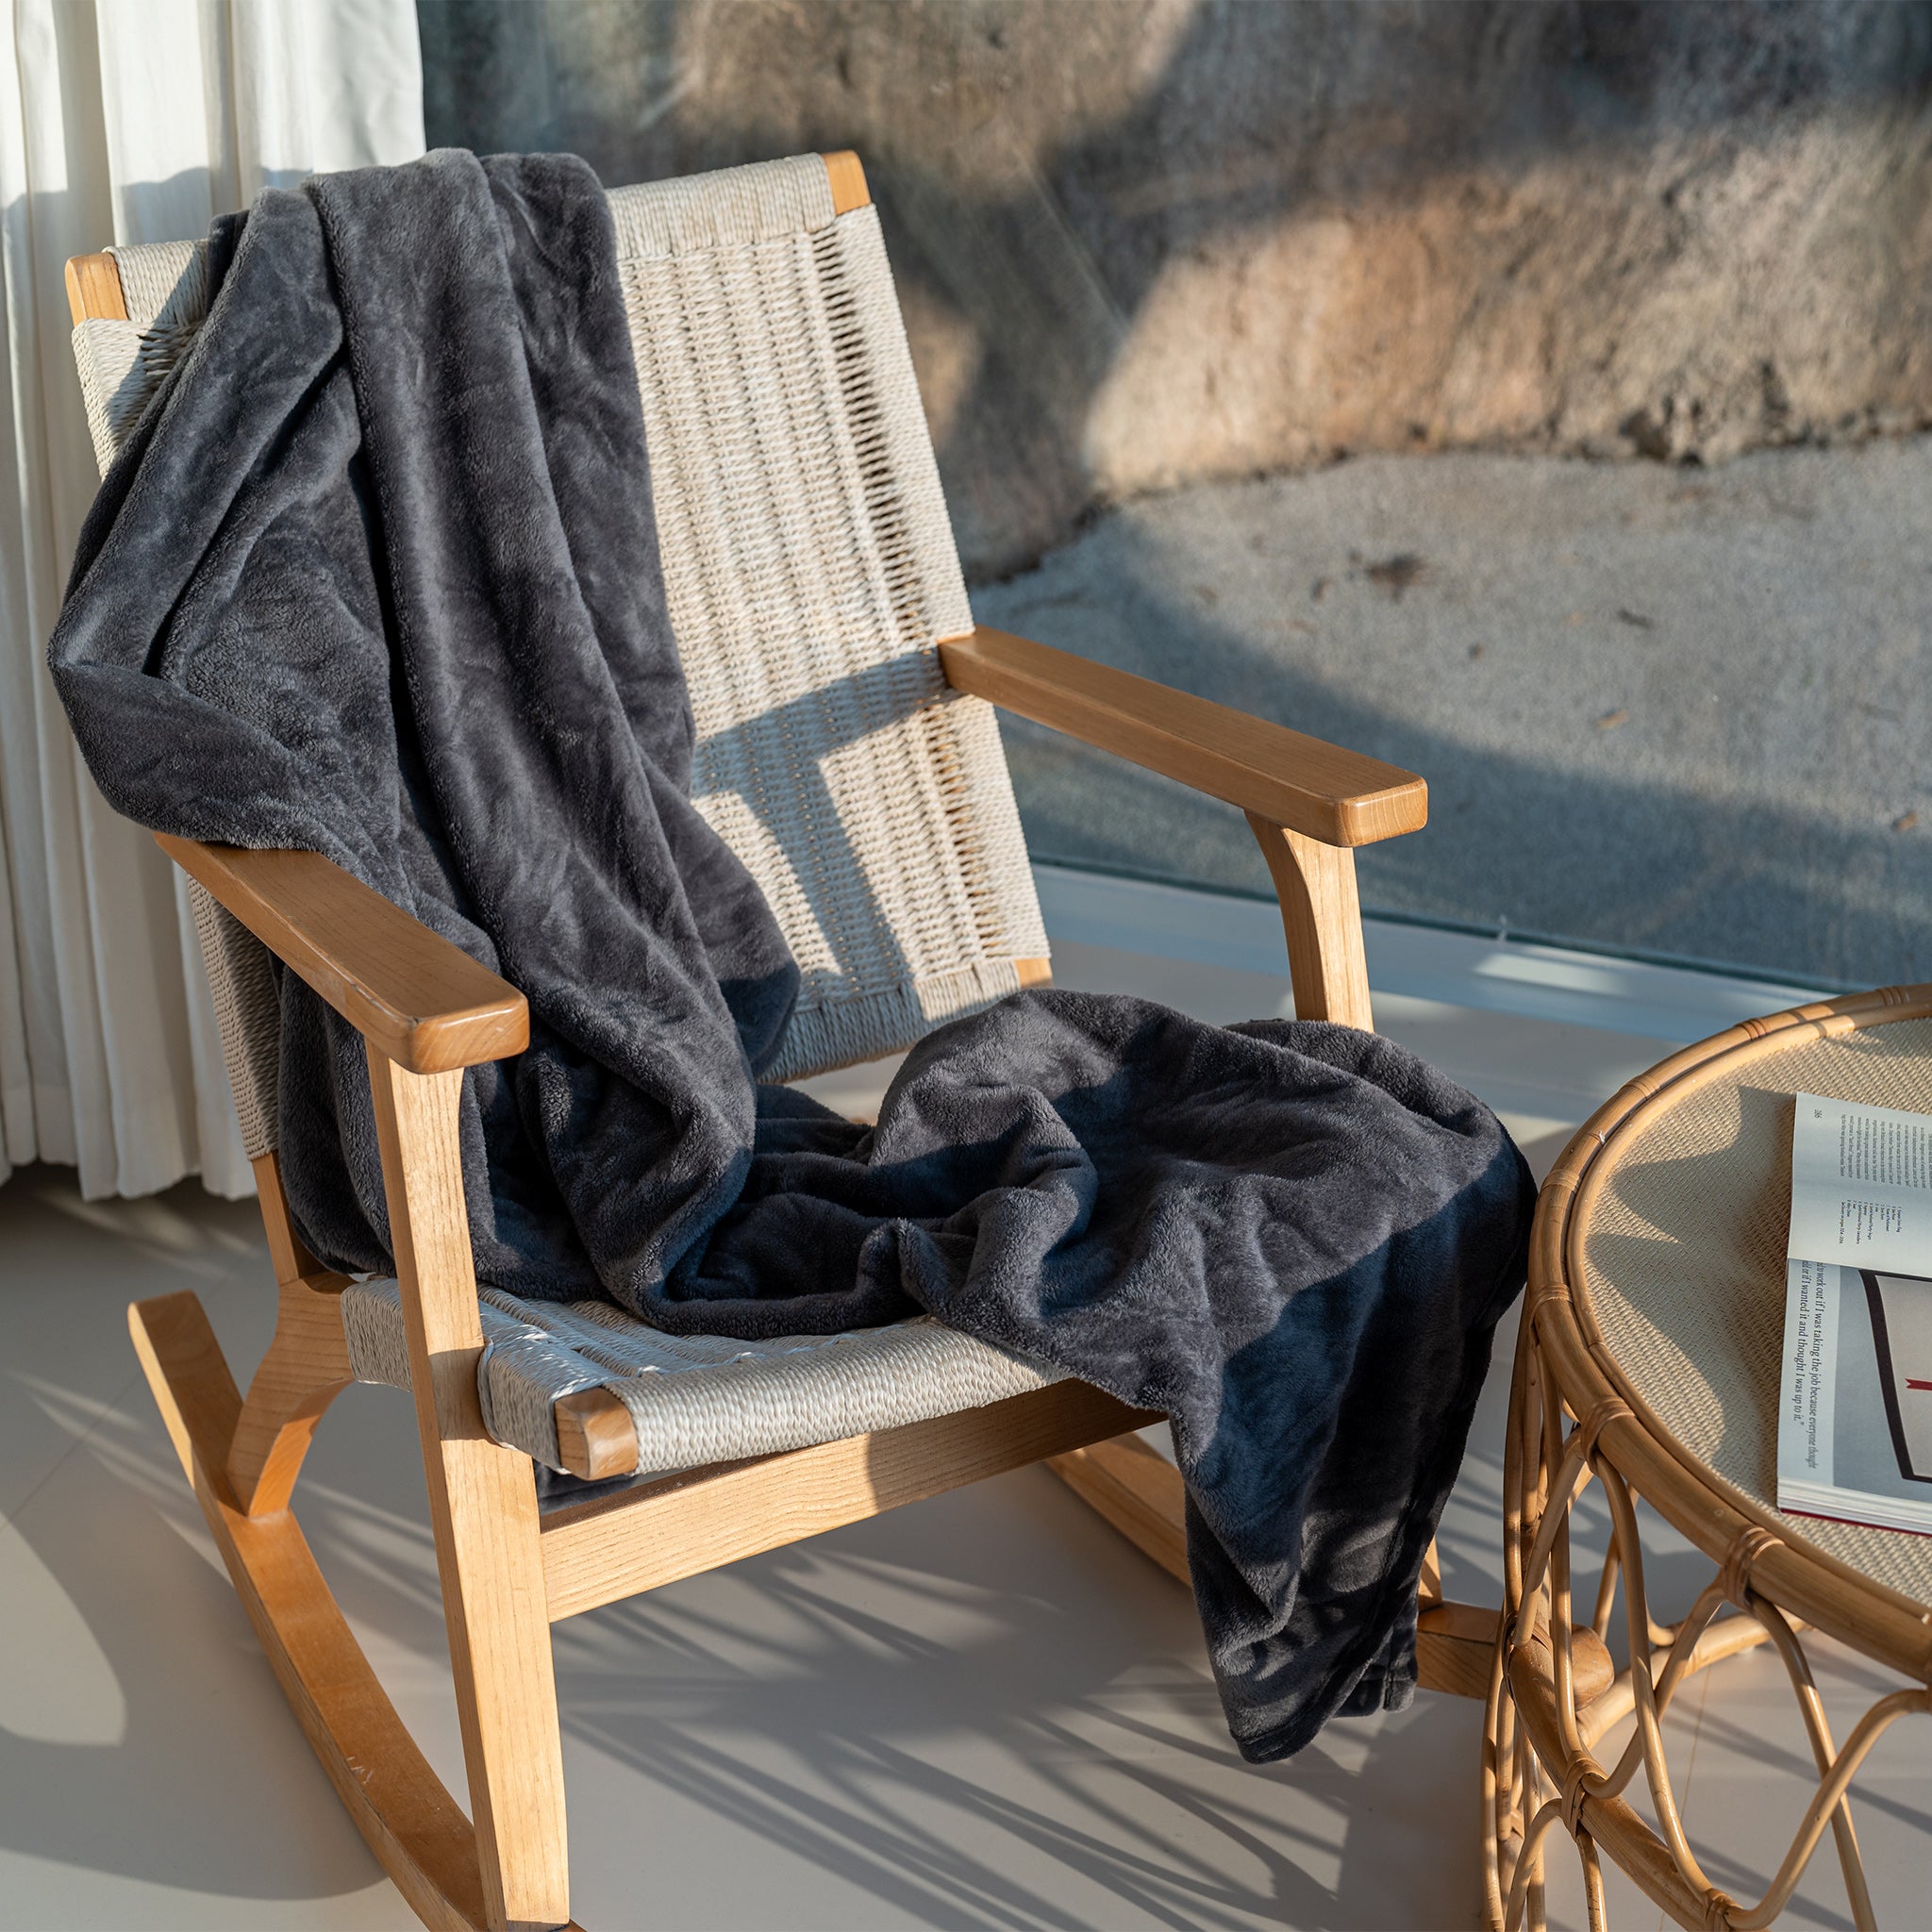 Minocasa Flannel Fleece Oversized Throw Blanket Dark Gray on Rocking Chair